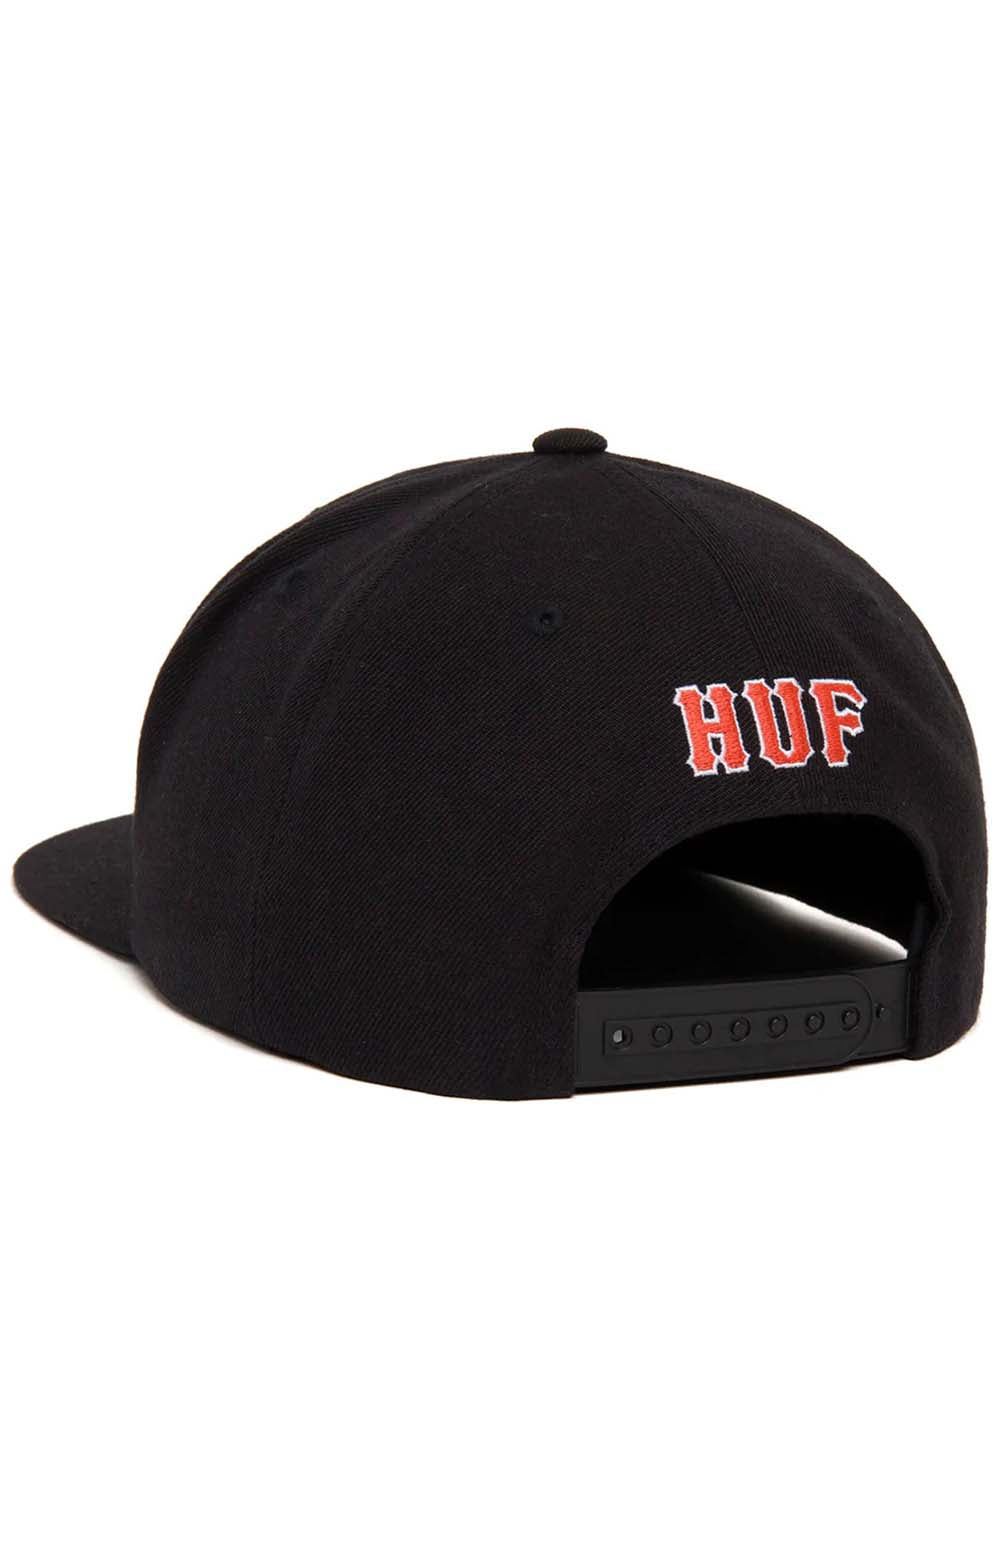 20th Anniversary Snap-Back Hat - Black